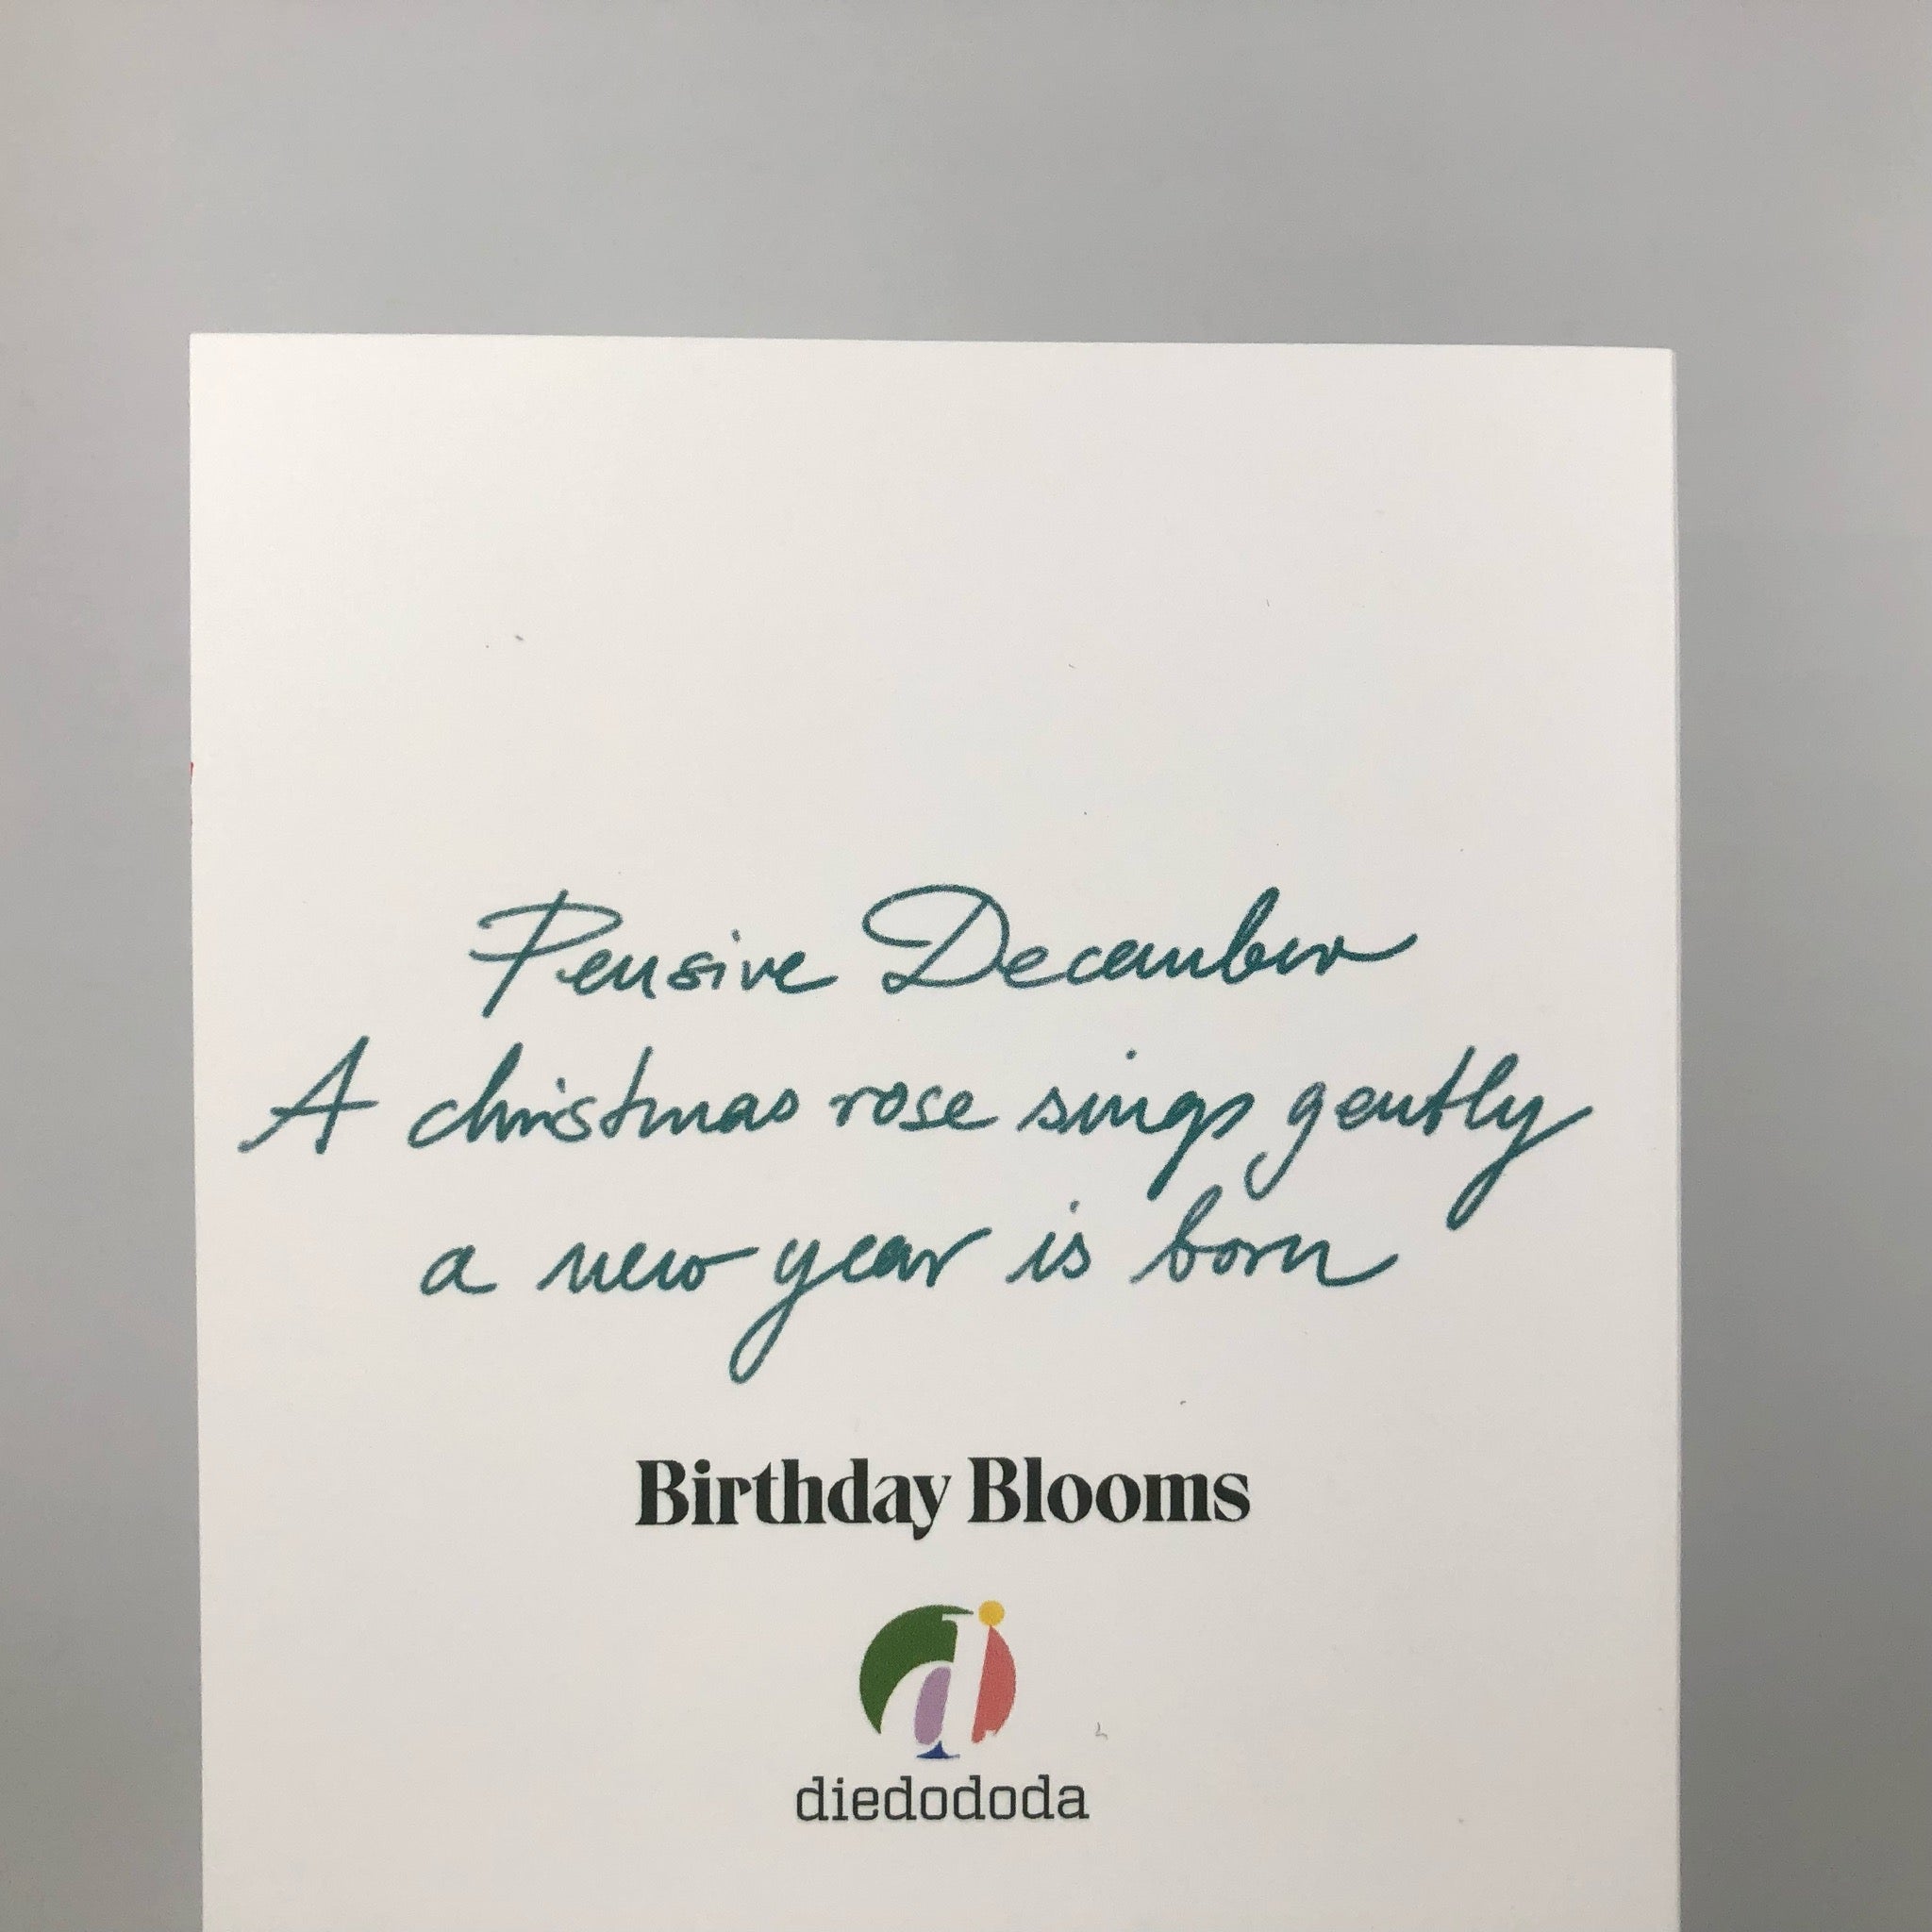 December Birthday Bloom Greeting Card